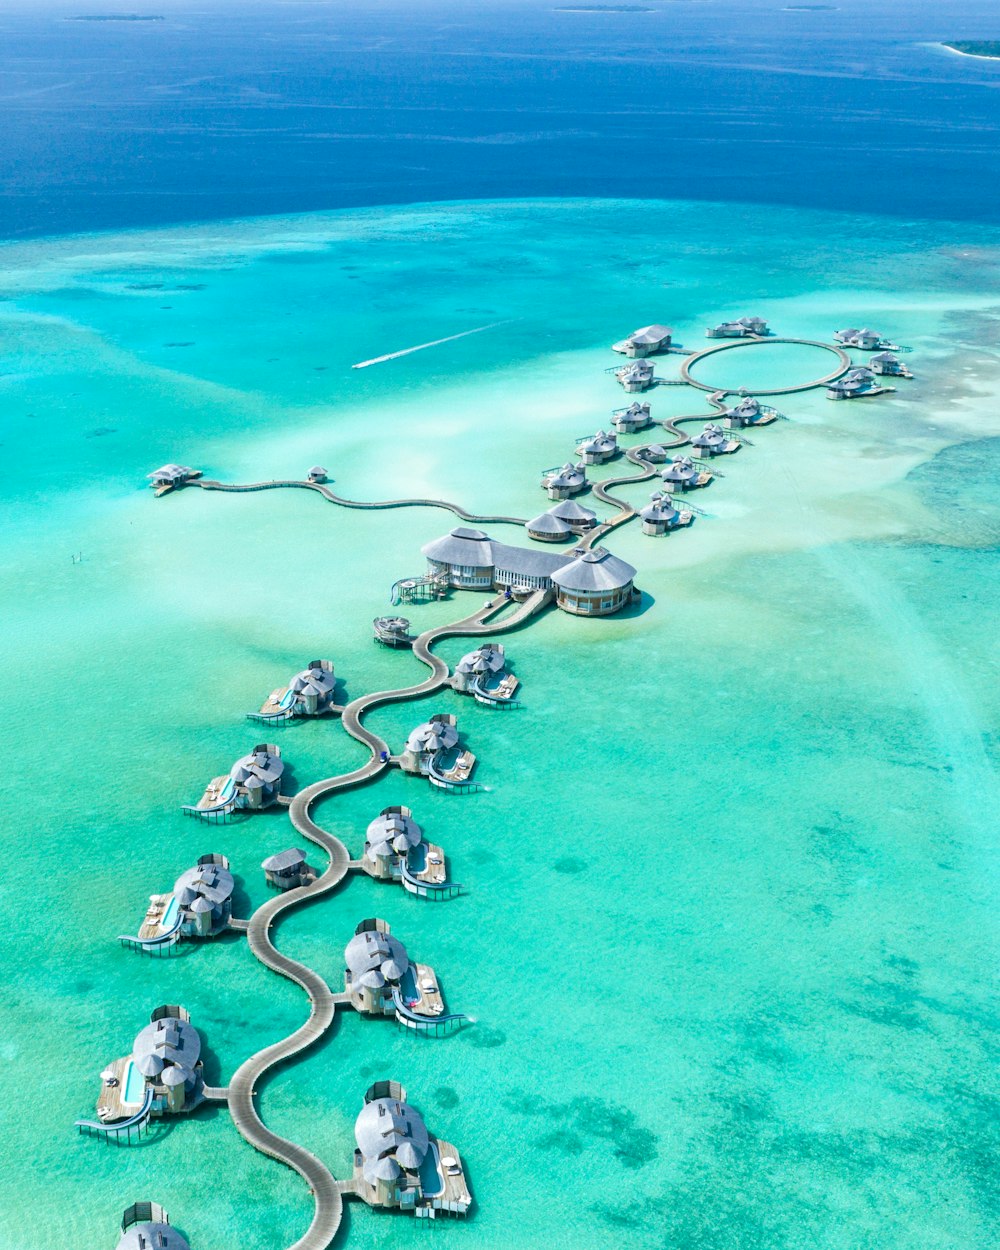 Soneva Jani Noonu Atoll Maldives Pictures Download Free Images